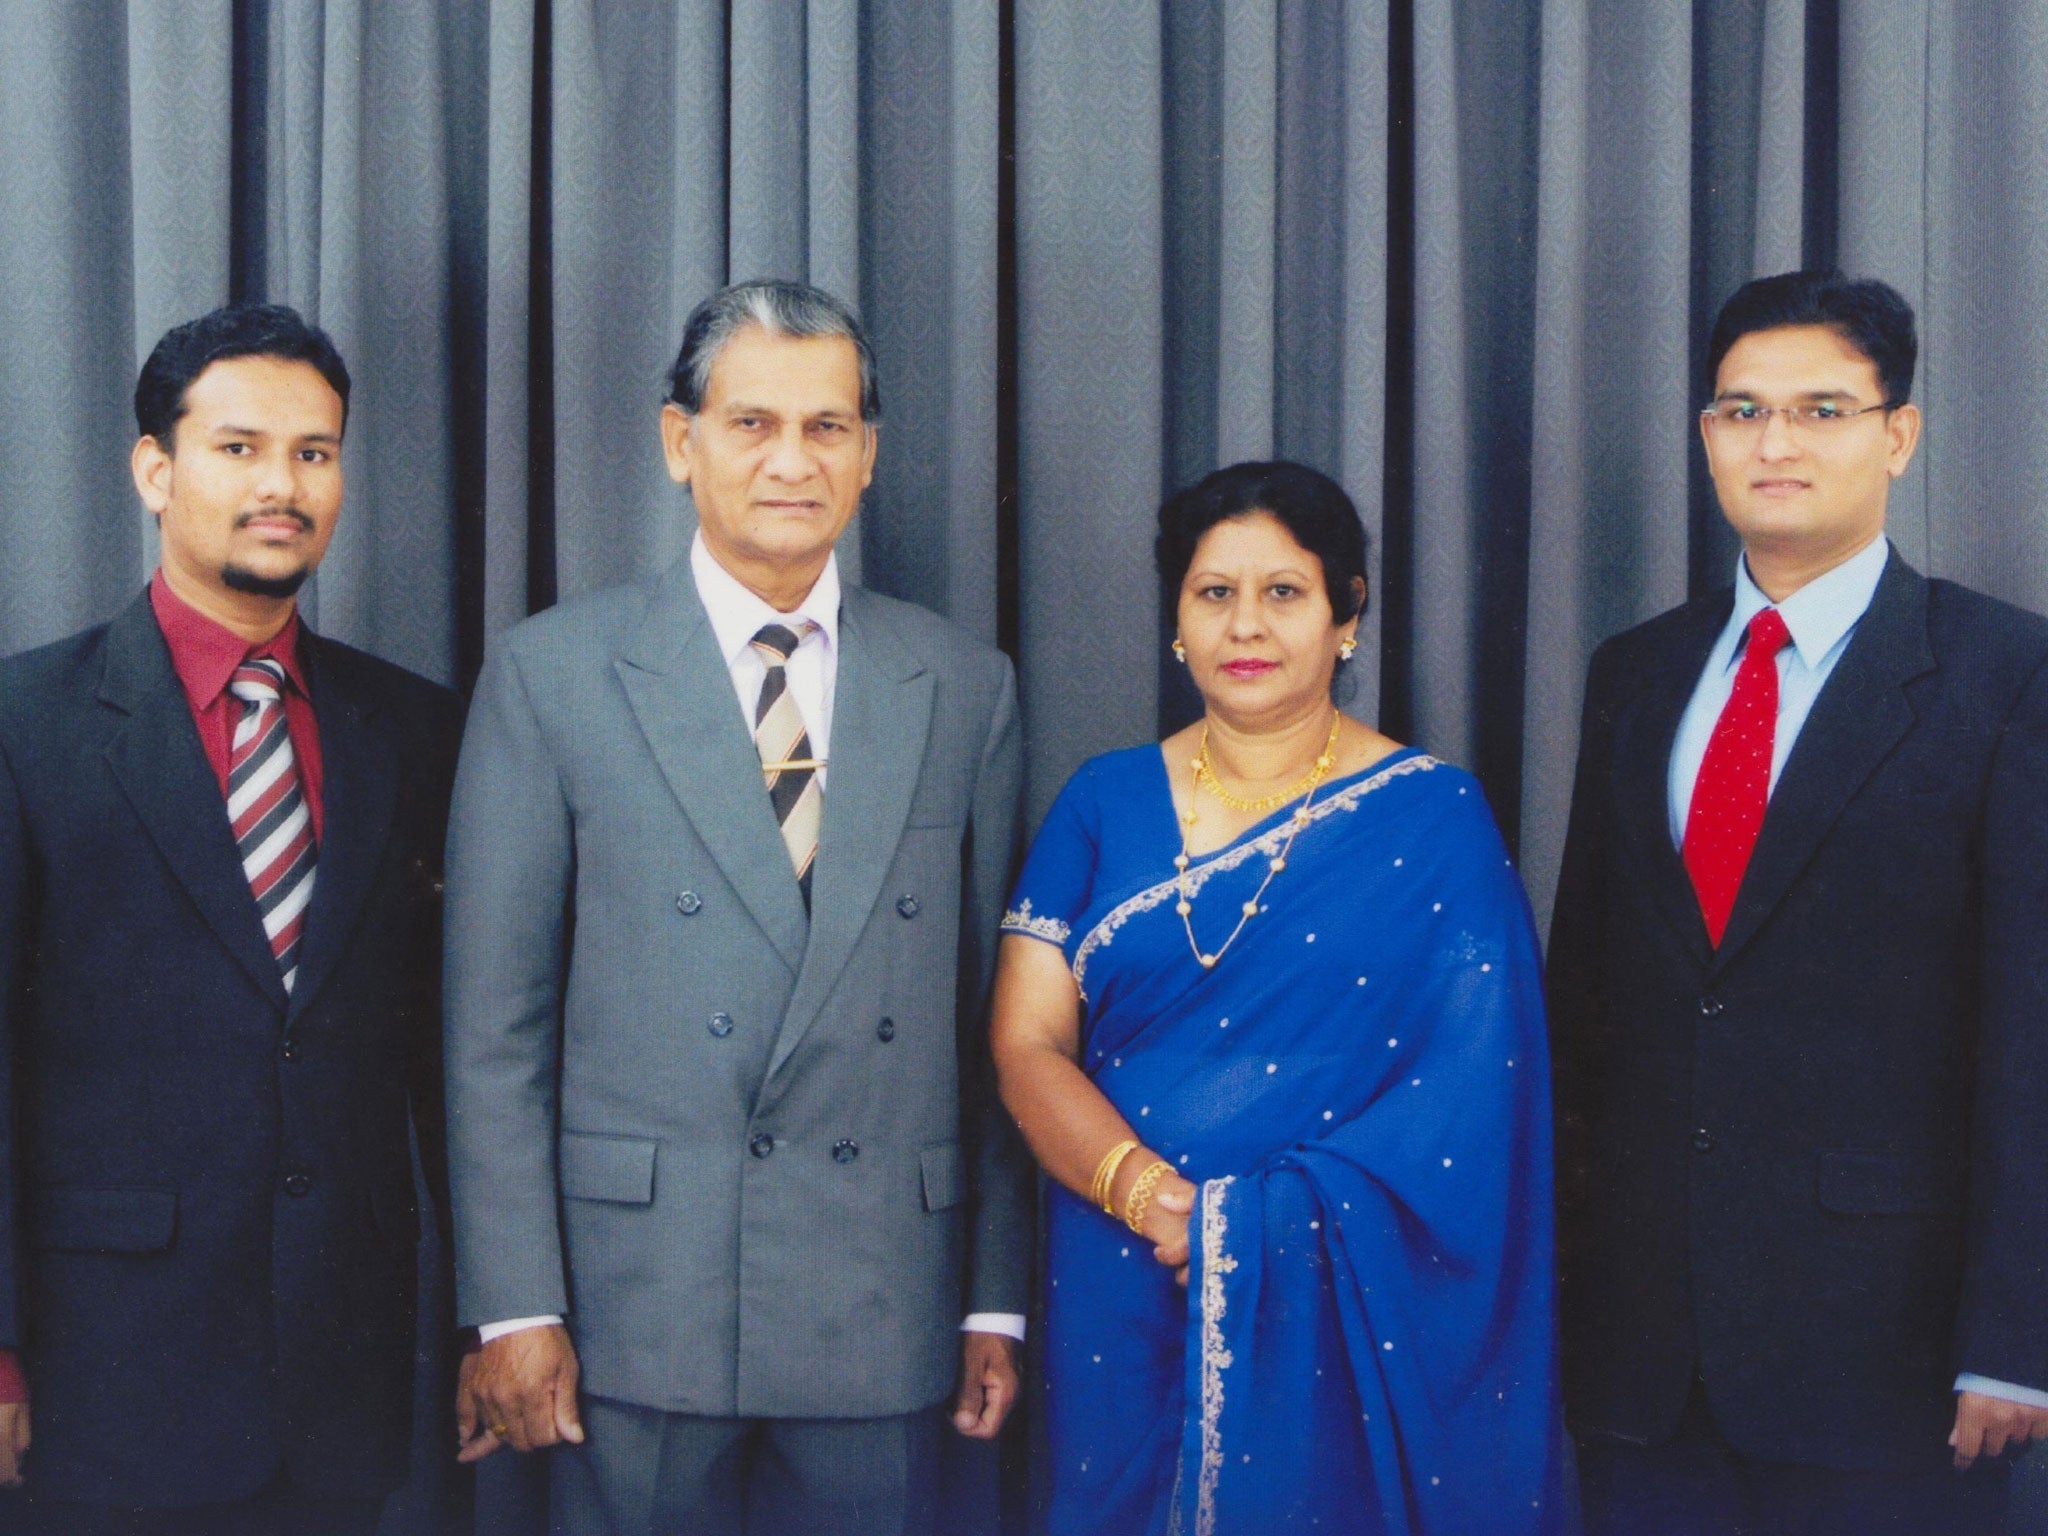 Thavisha Lakindu Peiris (far right) with his parents, his father Sarath Mahinda Peiris (second left) and mother Sudarma Narangoda